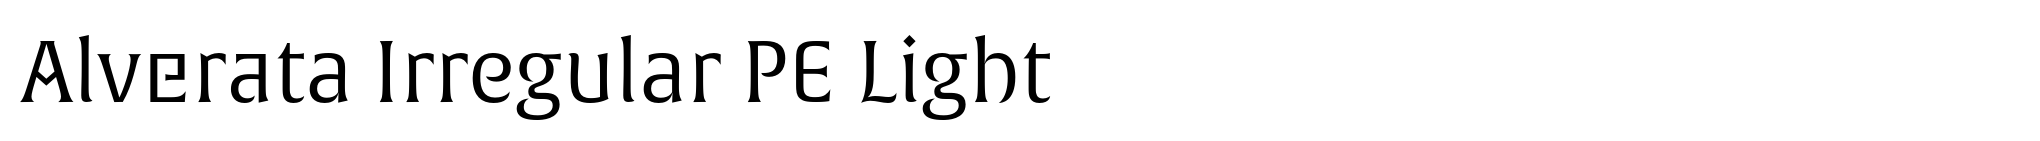 Alverata Irregular PE Light image